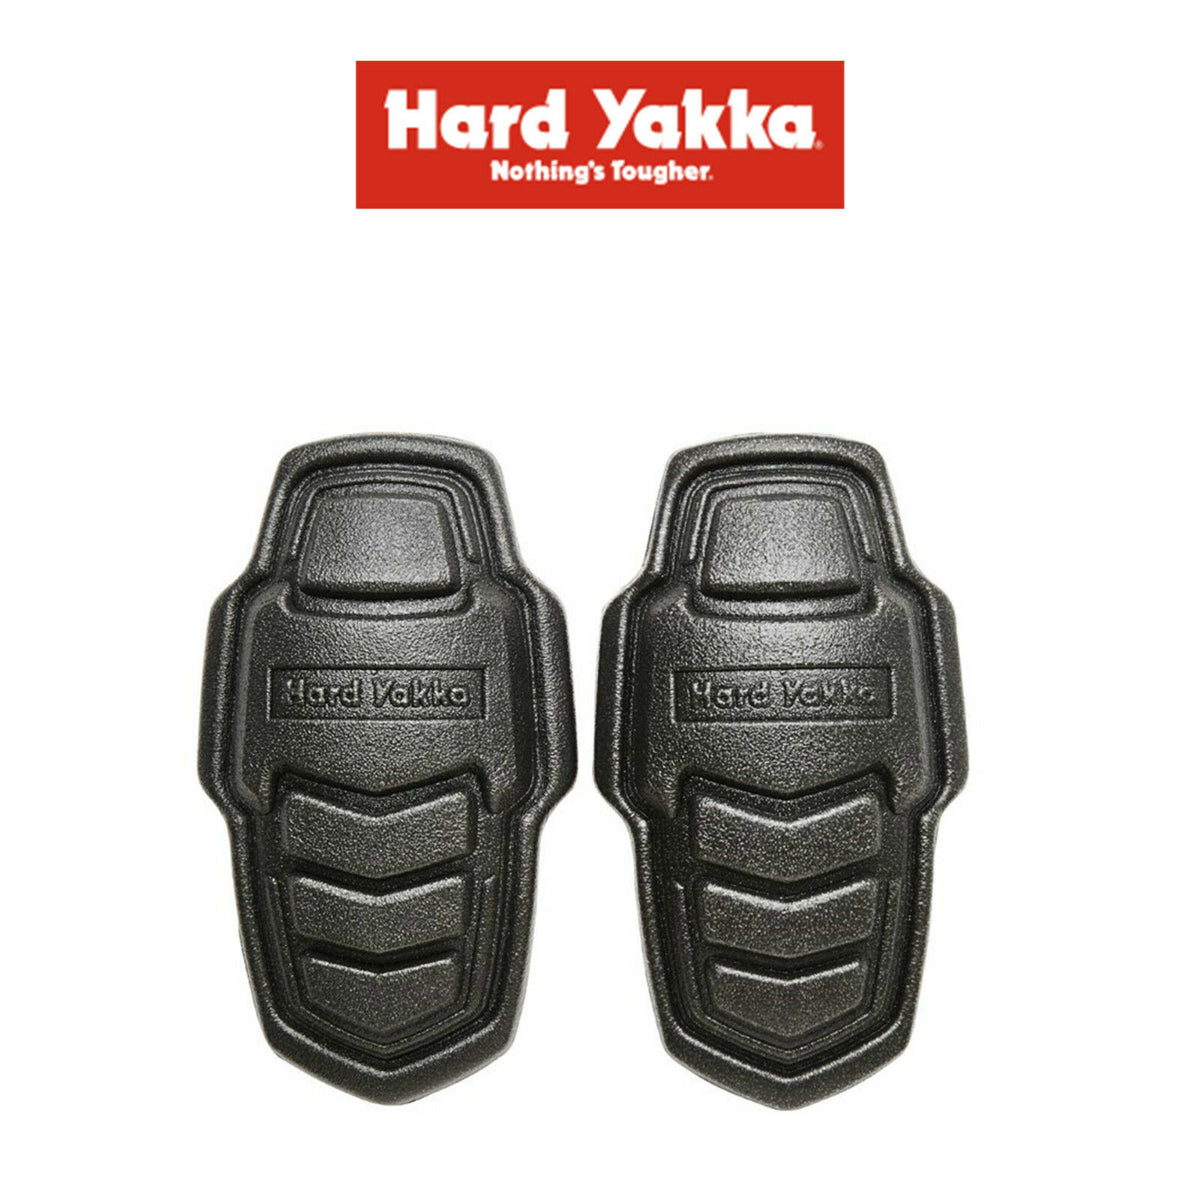 Mens Hard Yakka Legends Knee Pads Ultimate Protection Work Tough Durable Y22980